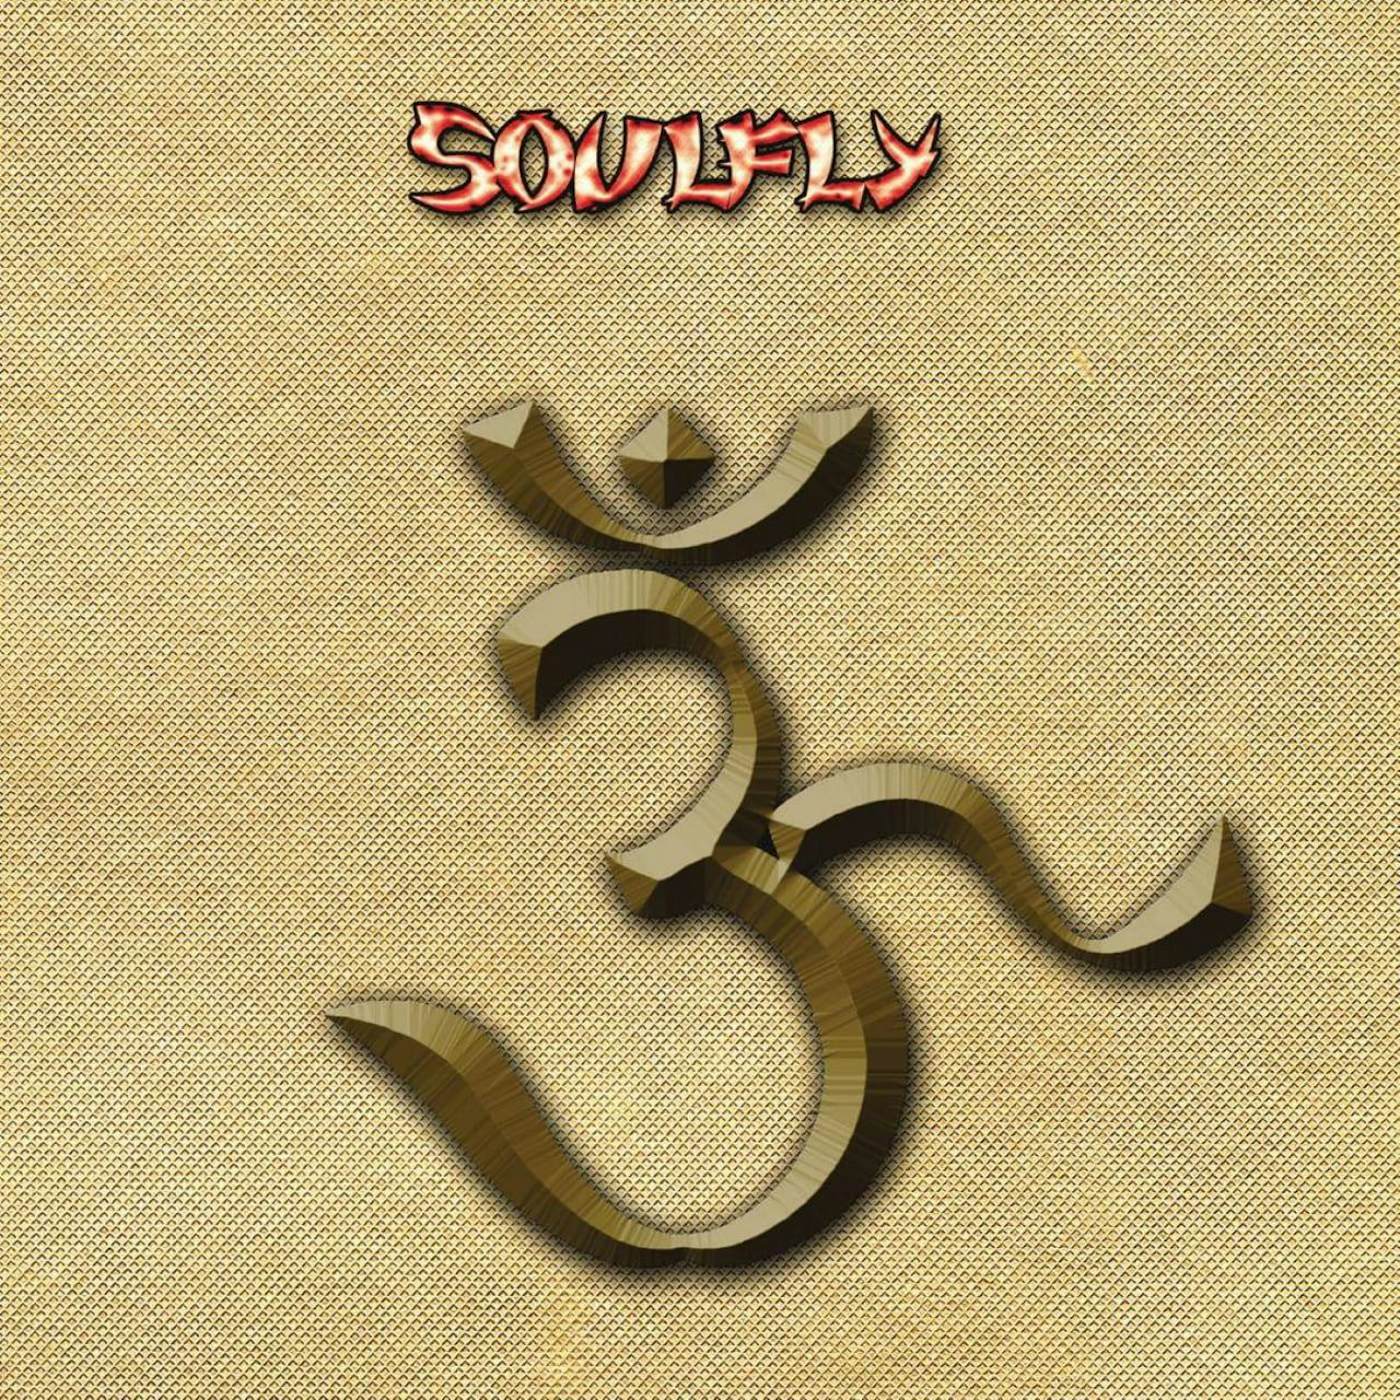 Soulfly 3 (2LP) Vinyl Record